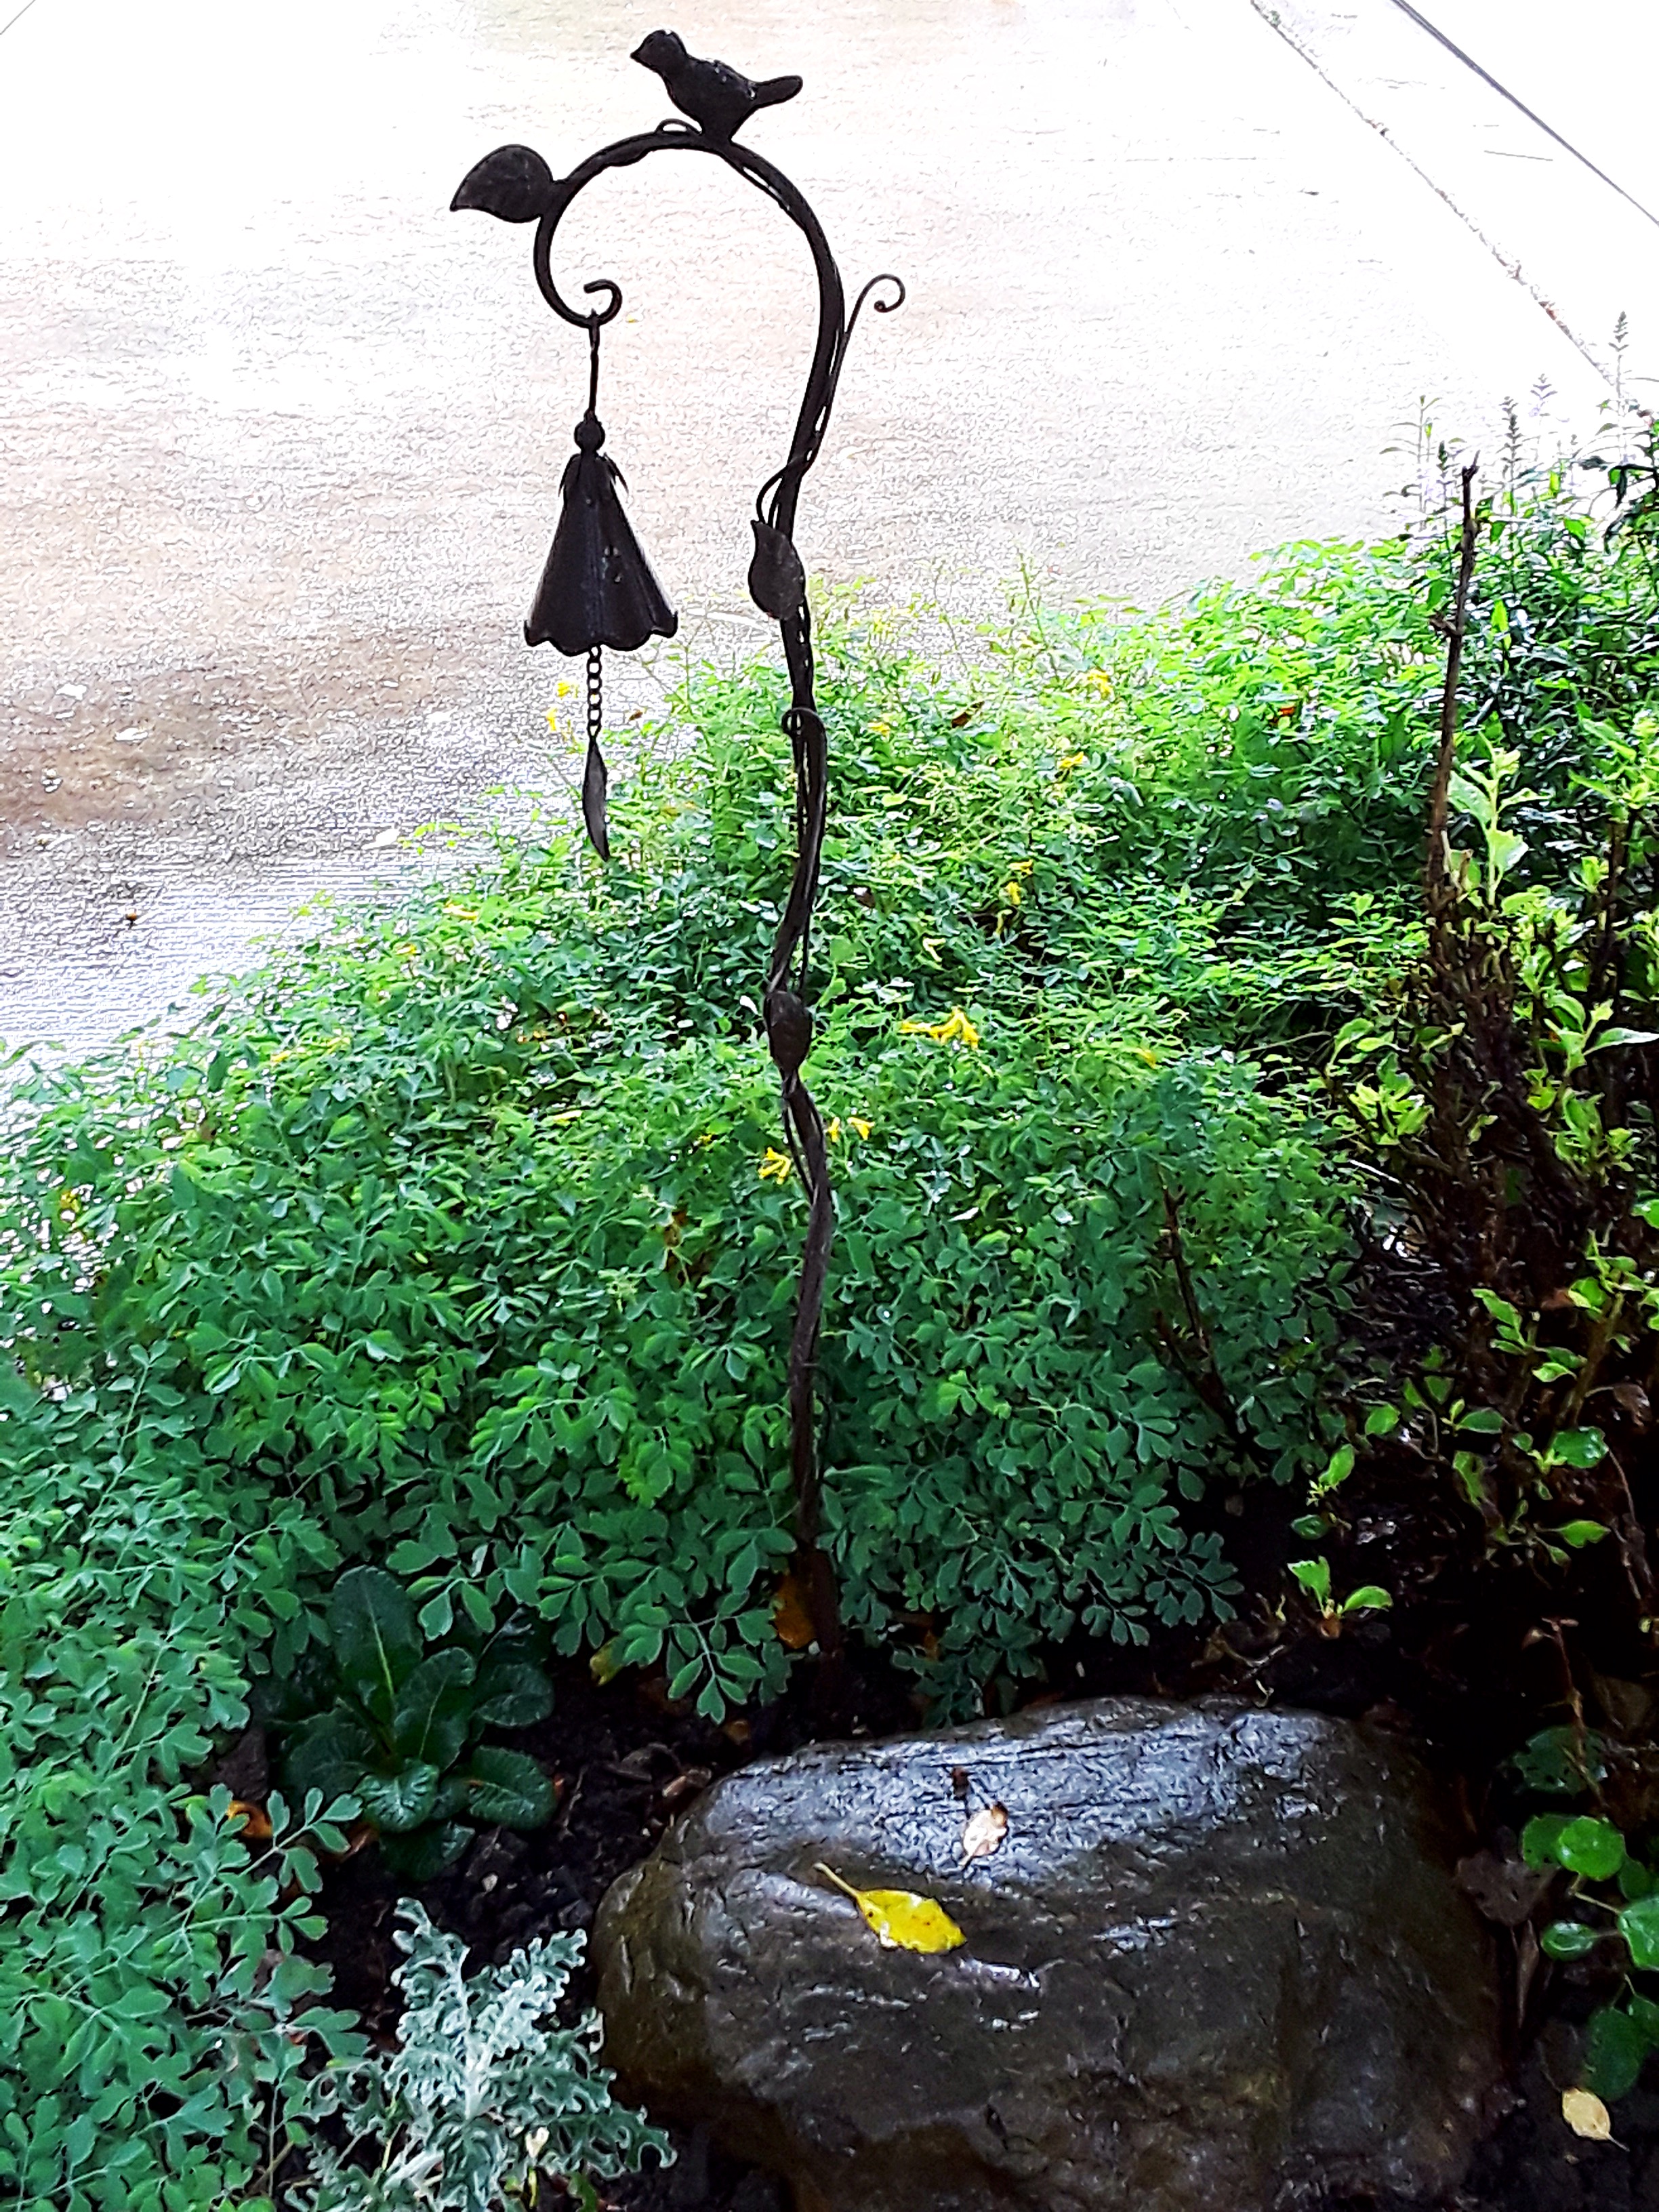 a metalwork bell hangs over a flower border